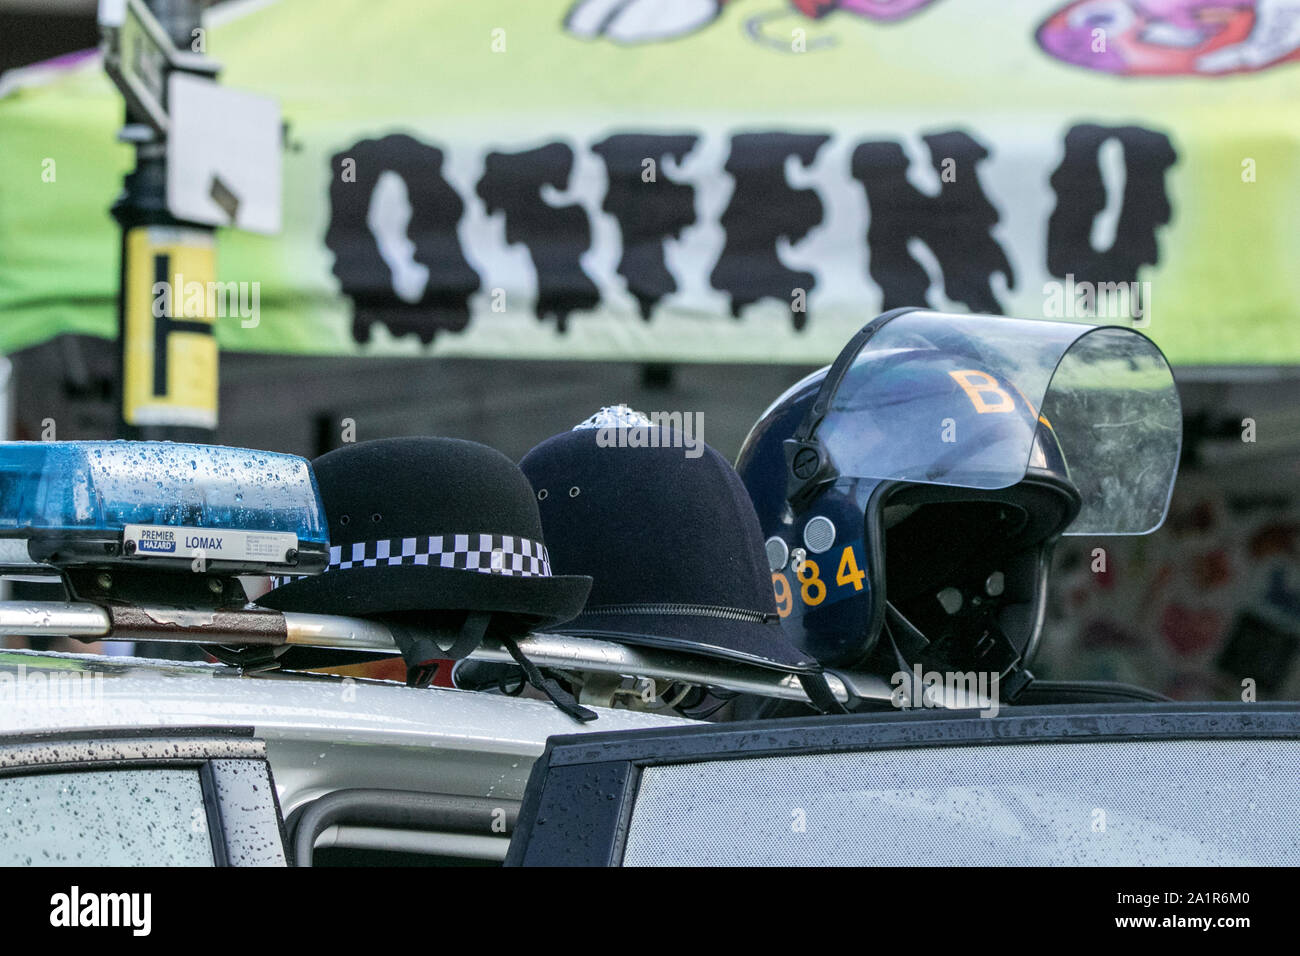 Police officers in attendance at the Preston Gay Pride event in Preston city centre, UK Stock Photo